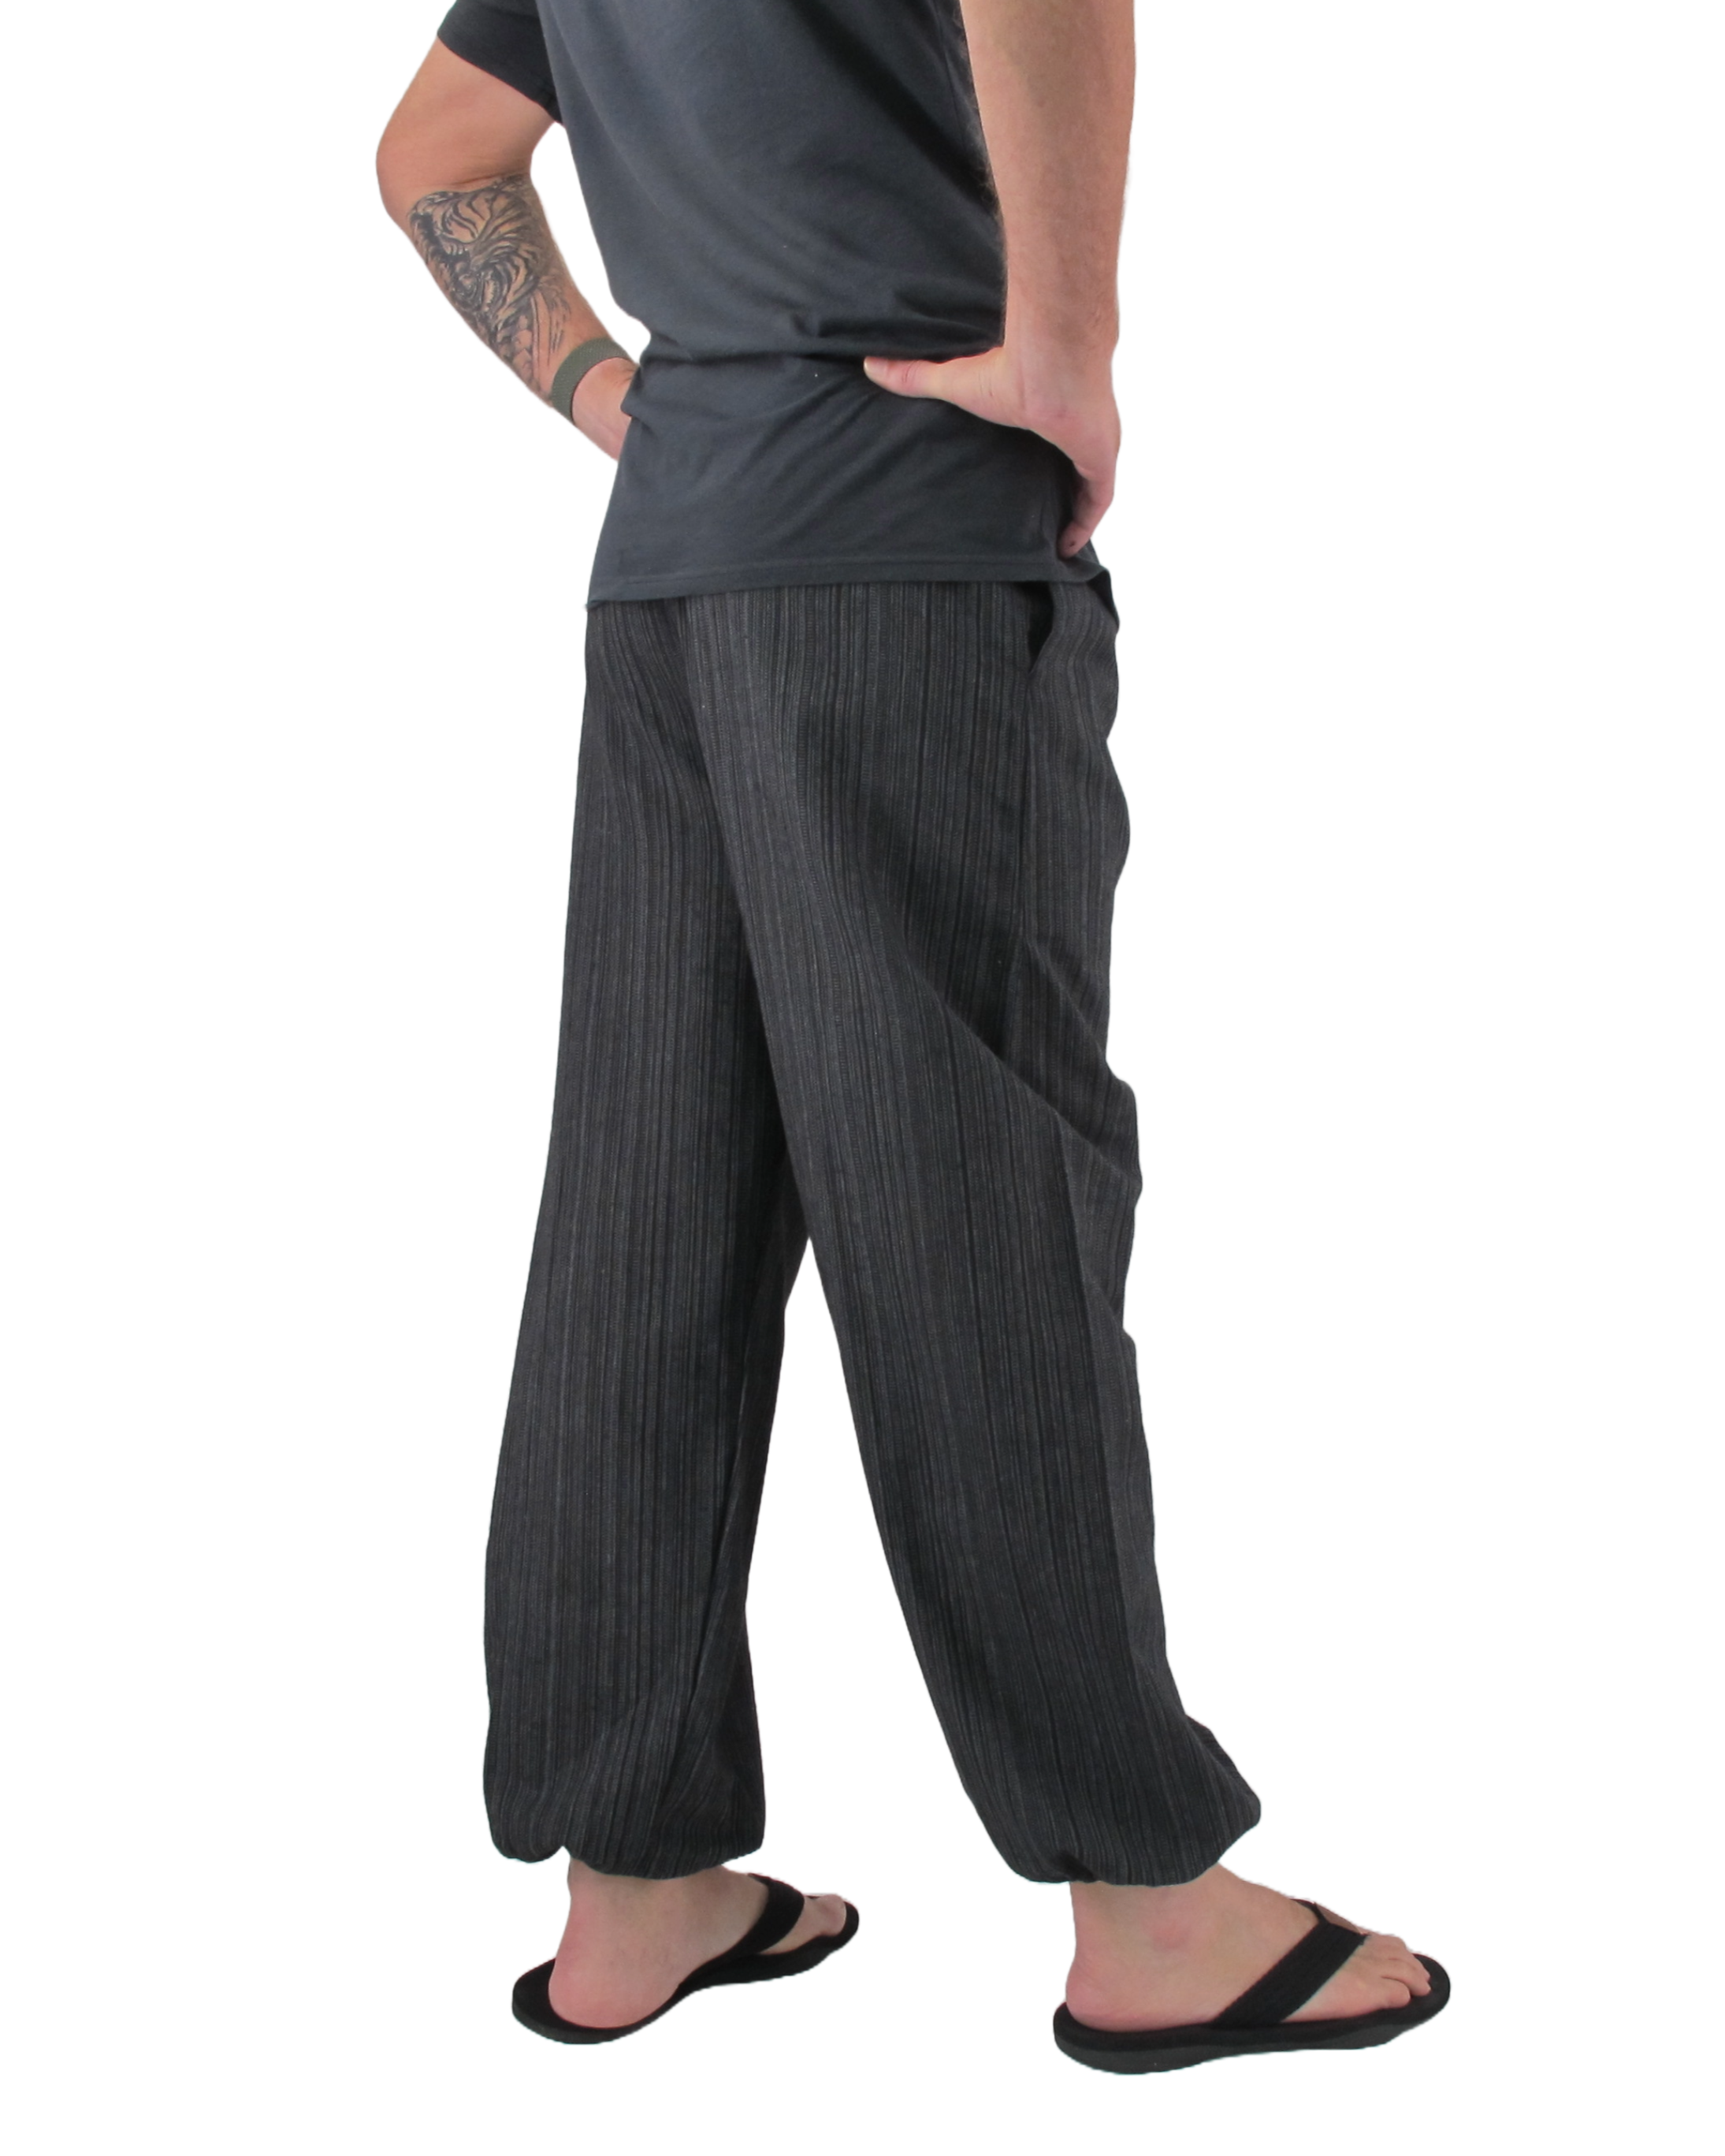 PALACLOTH High Waist Denim Jeans Women'S Bell Bottom Flare Pants Full  Length Hippie Trousers - Walmart.com